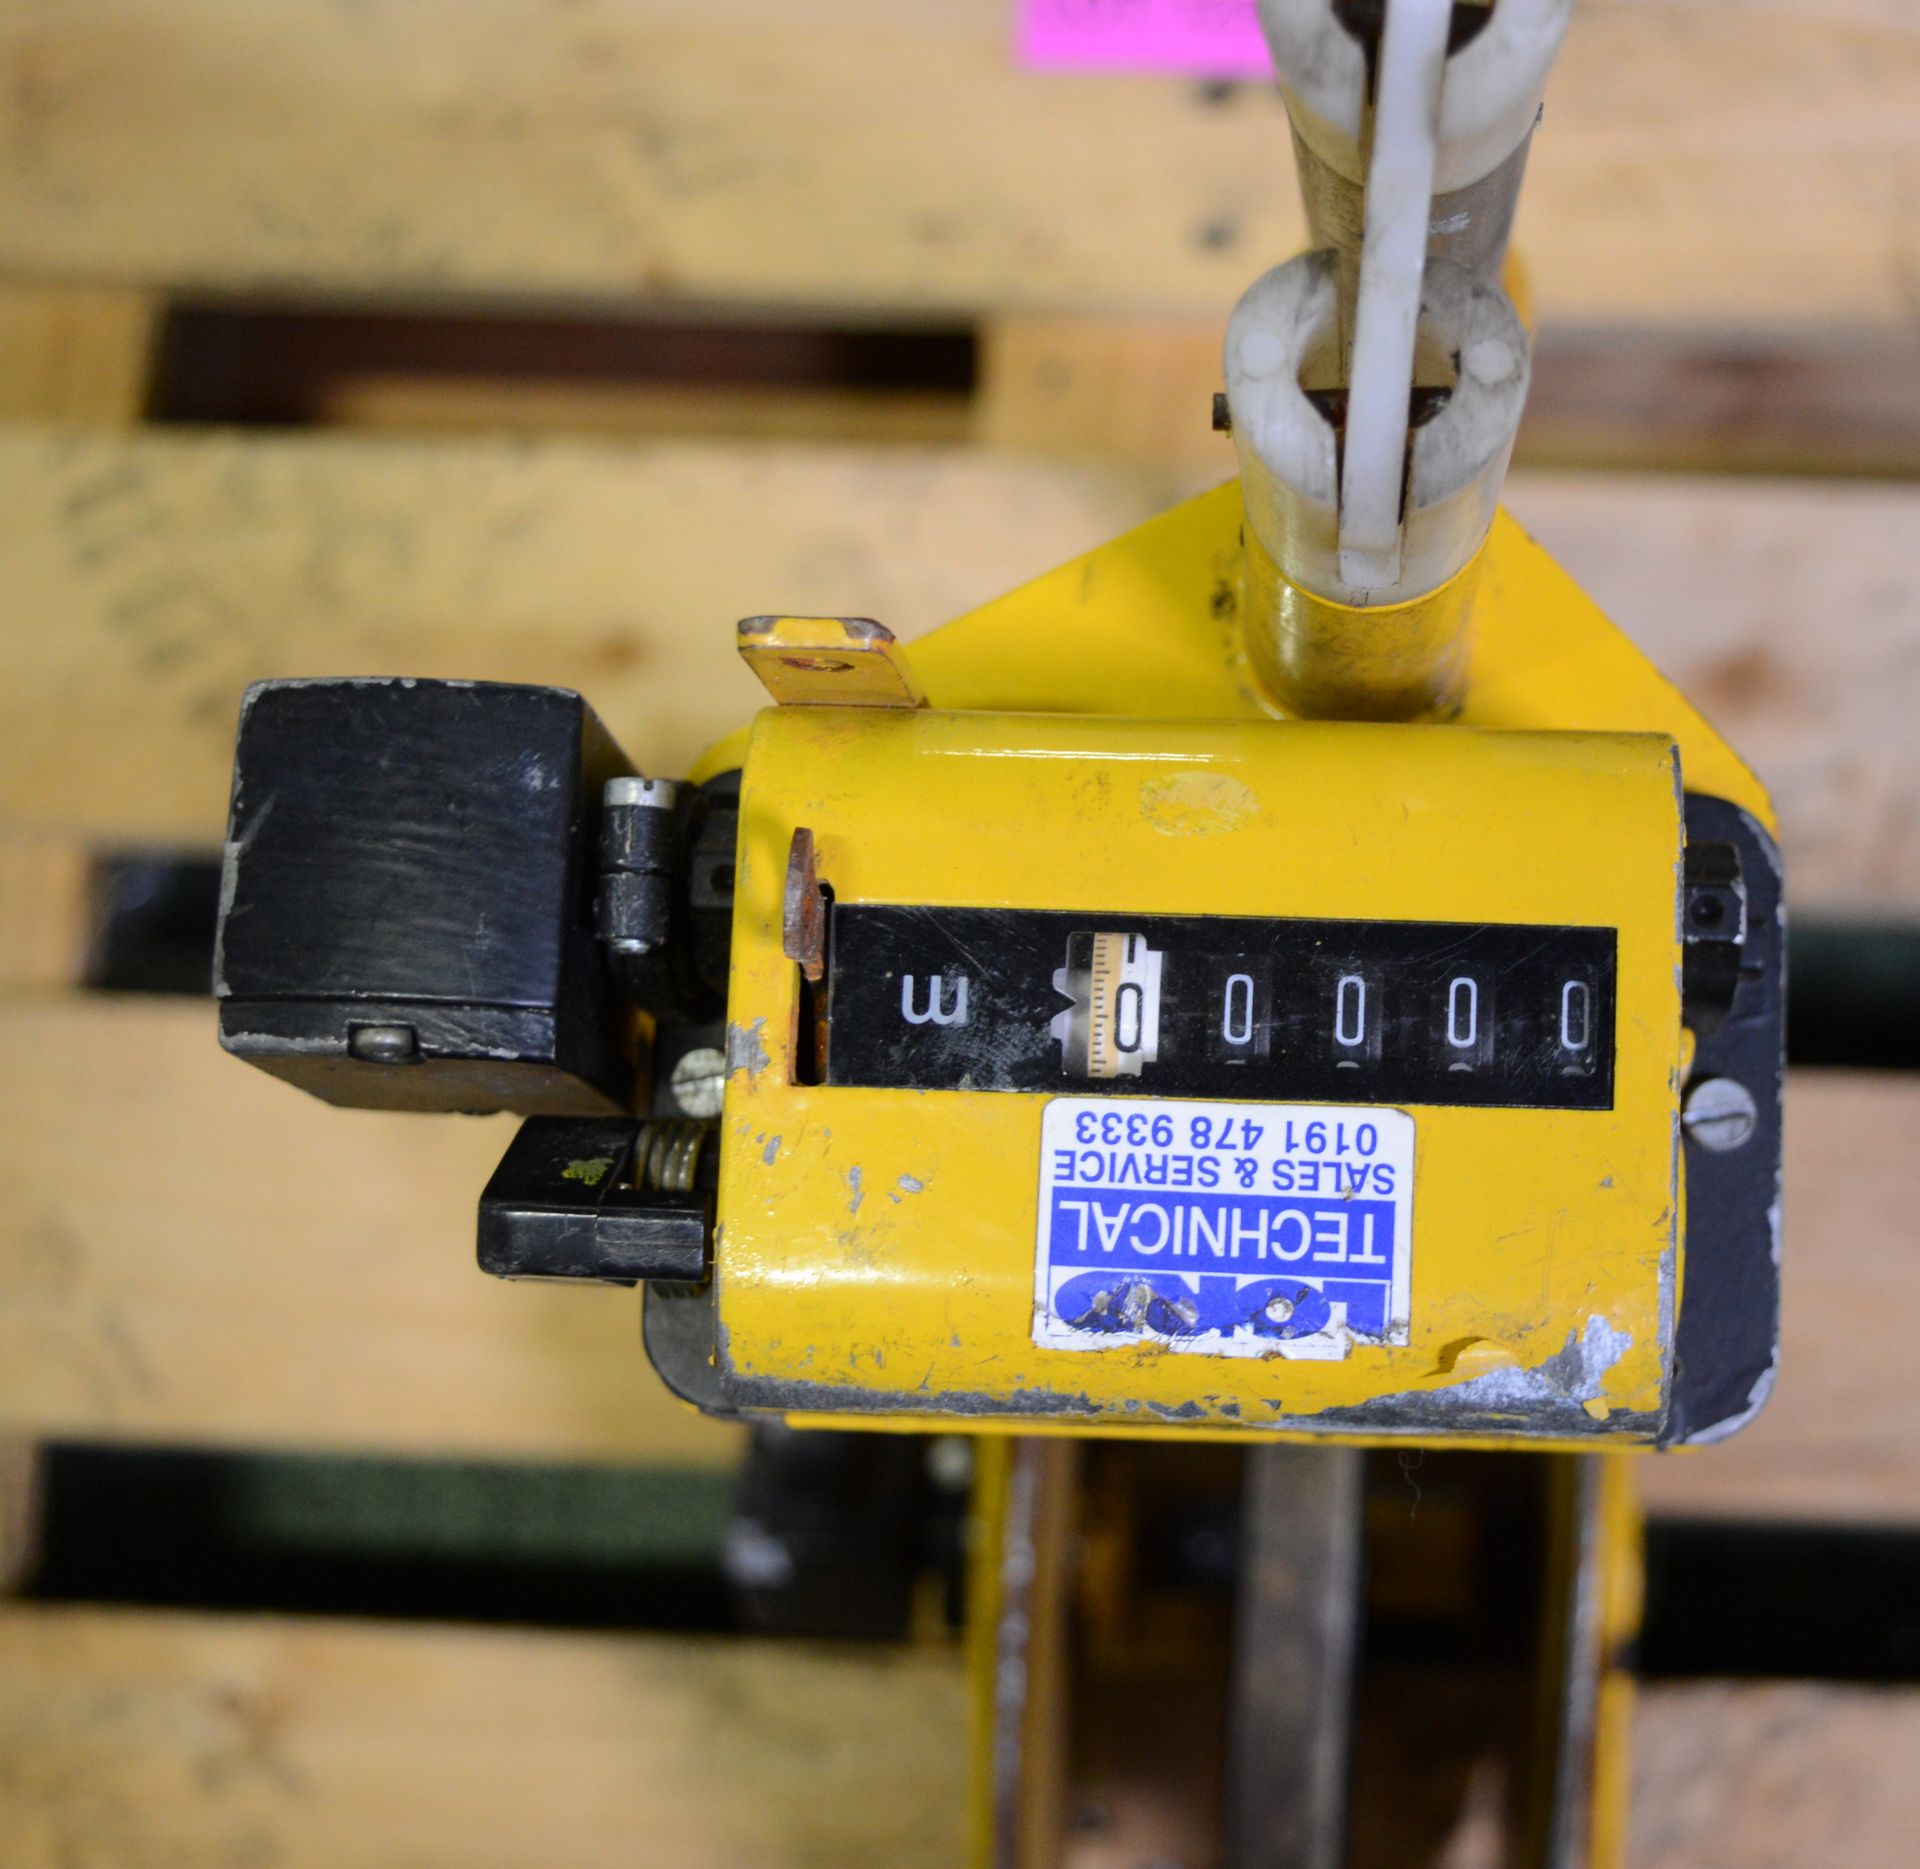 Metric Railway Measuring Wheel with Folding Handle. - Image 2 of 4